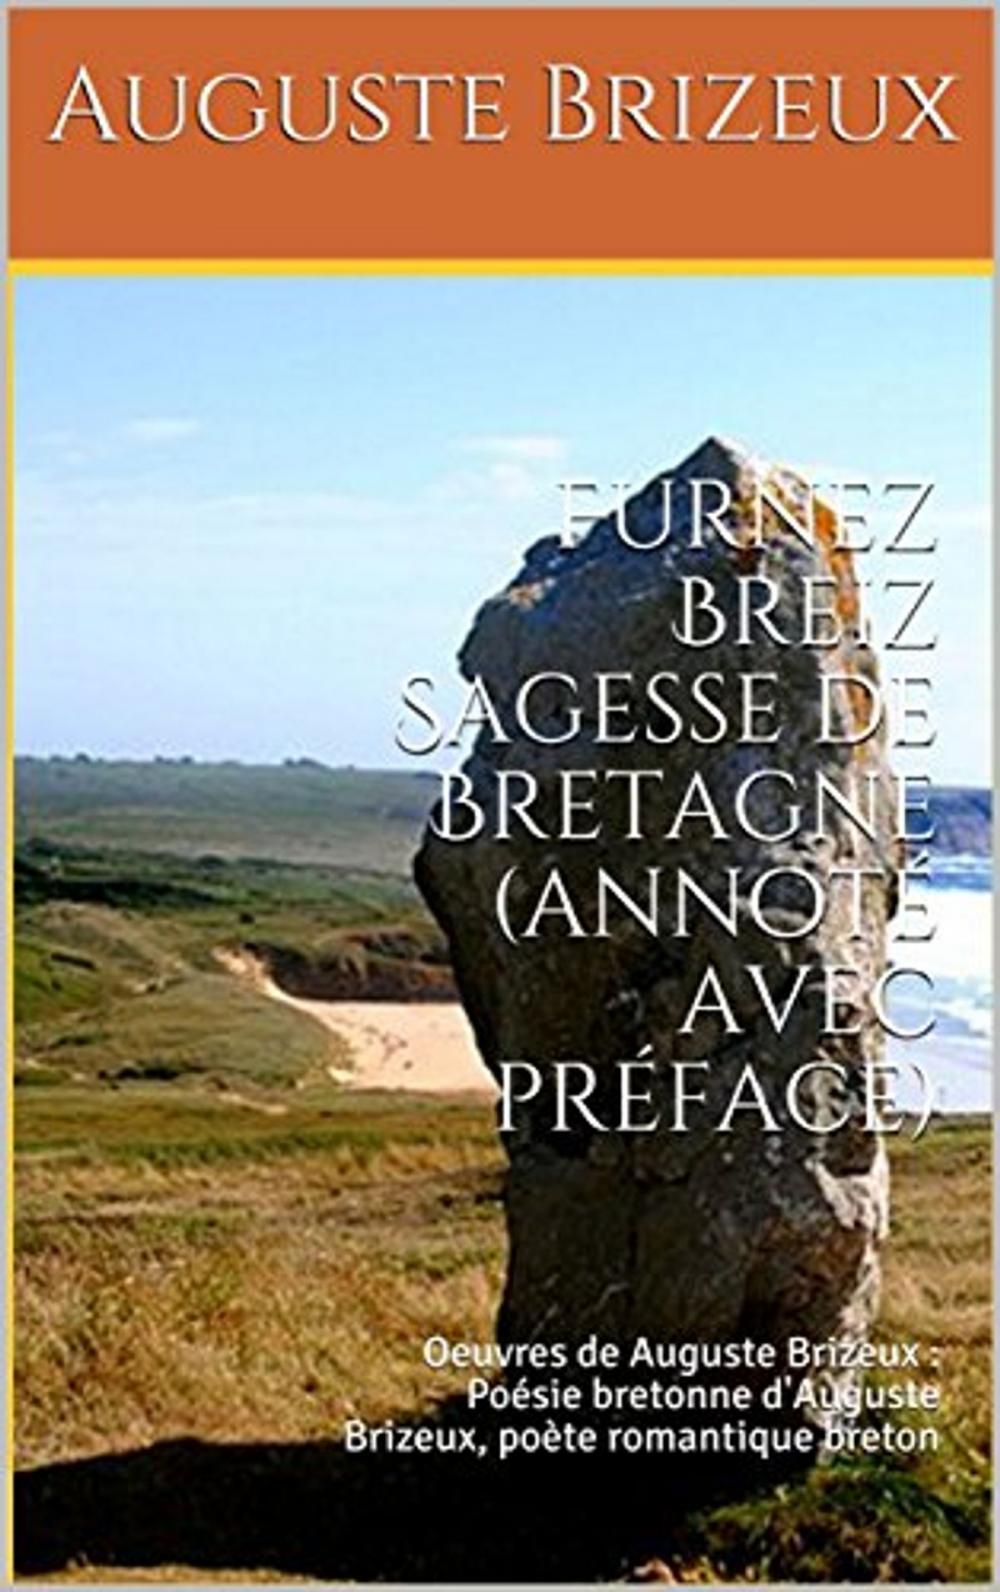 Big bigCover of Furnez Breiz SAGESSE DE BRETAGNE (annoté avec préface)